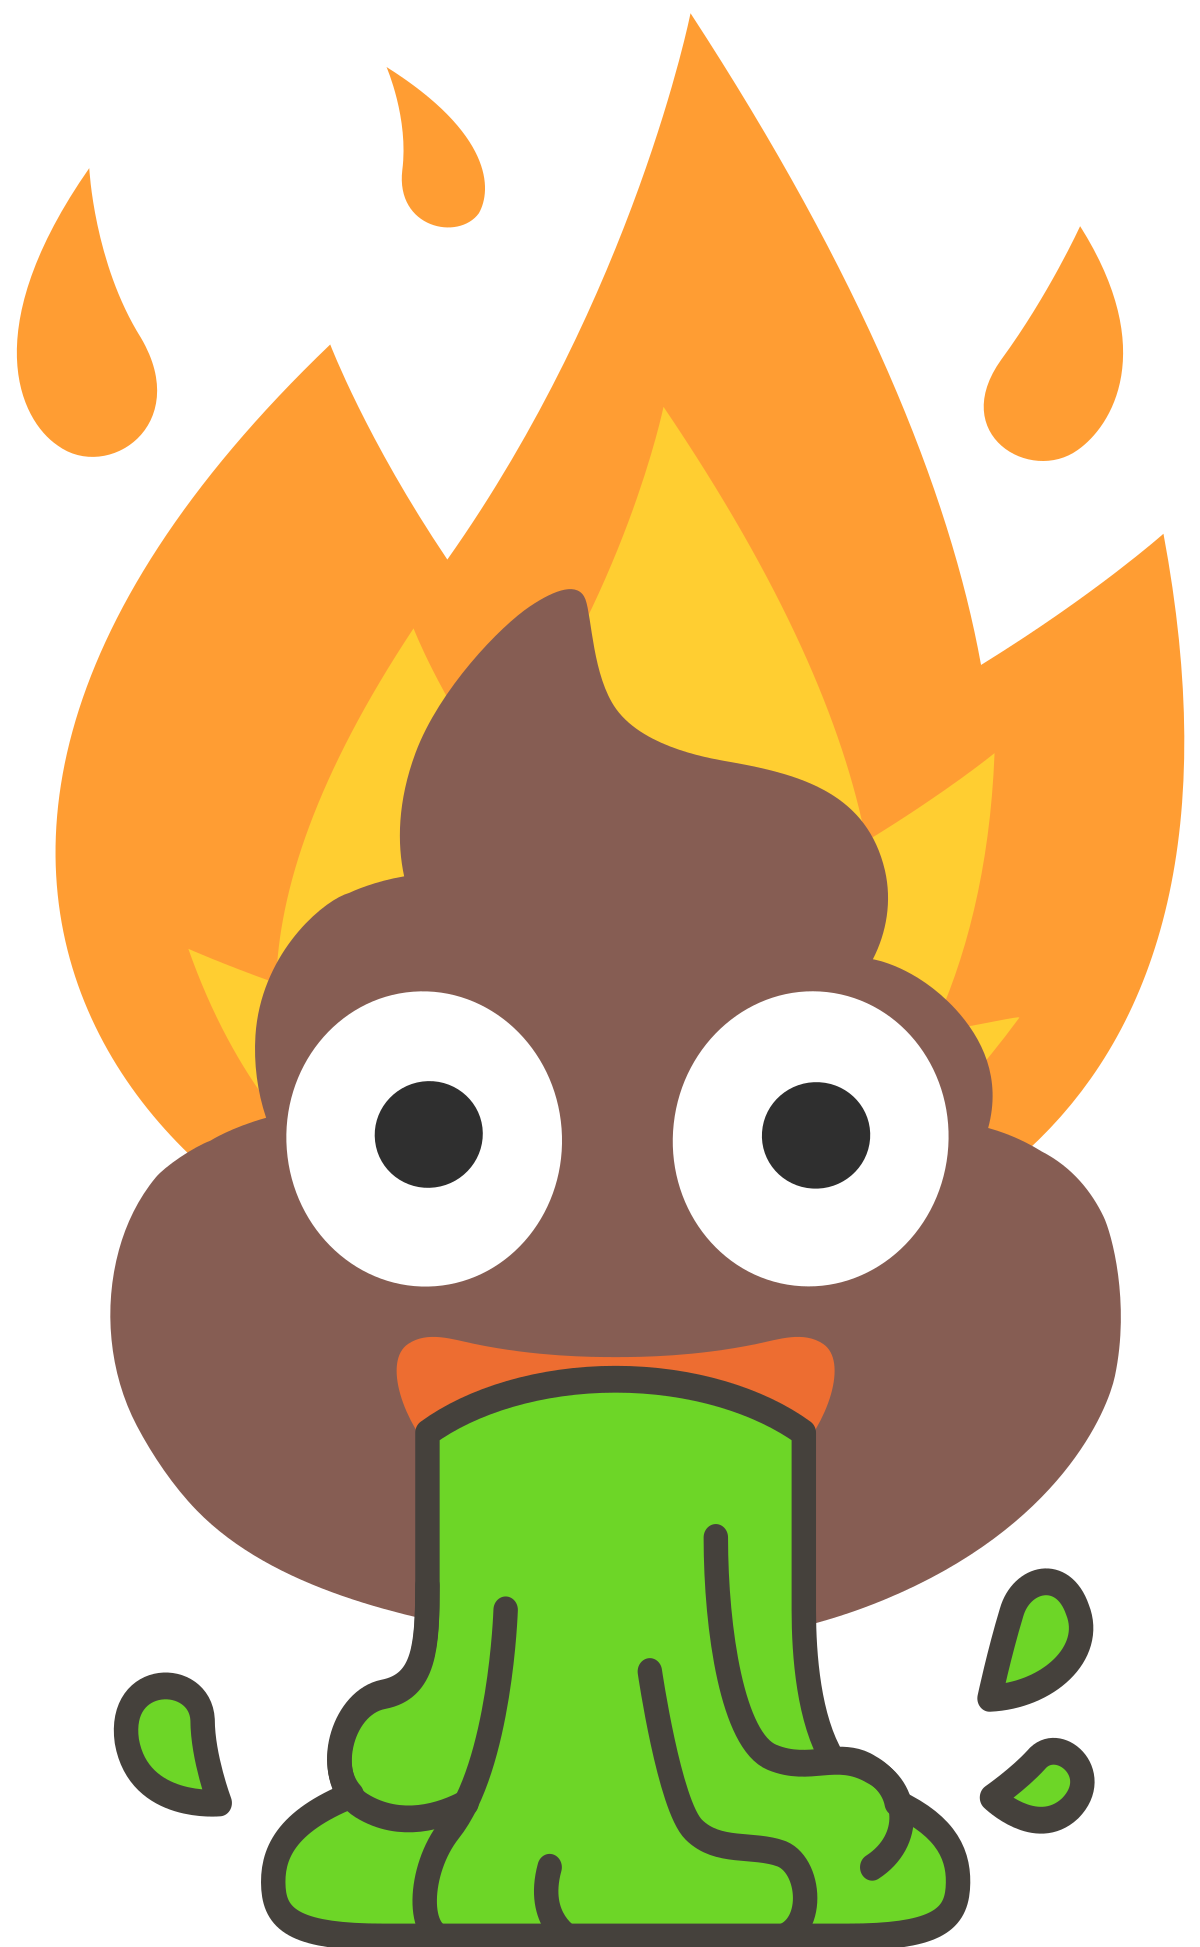 Vector Poop Emoji PNG Image Background